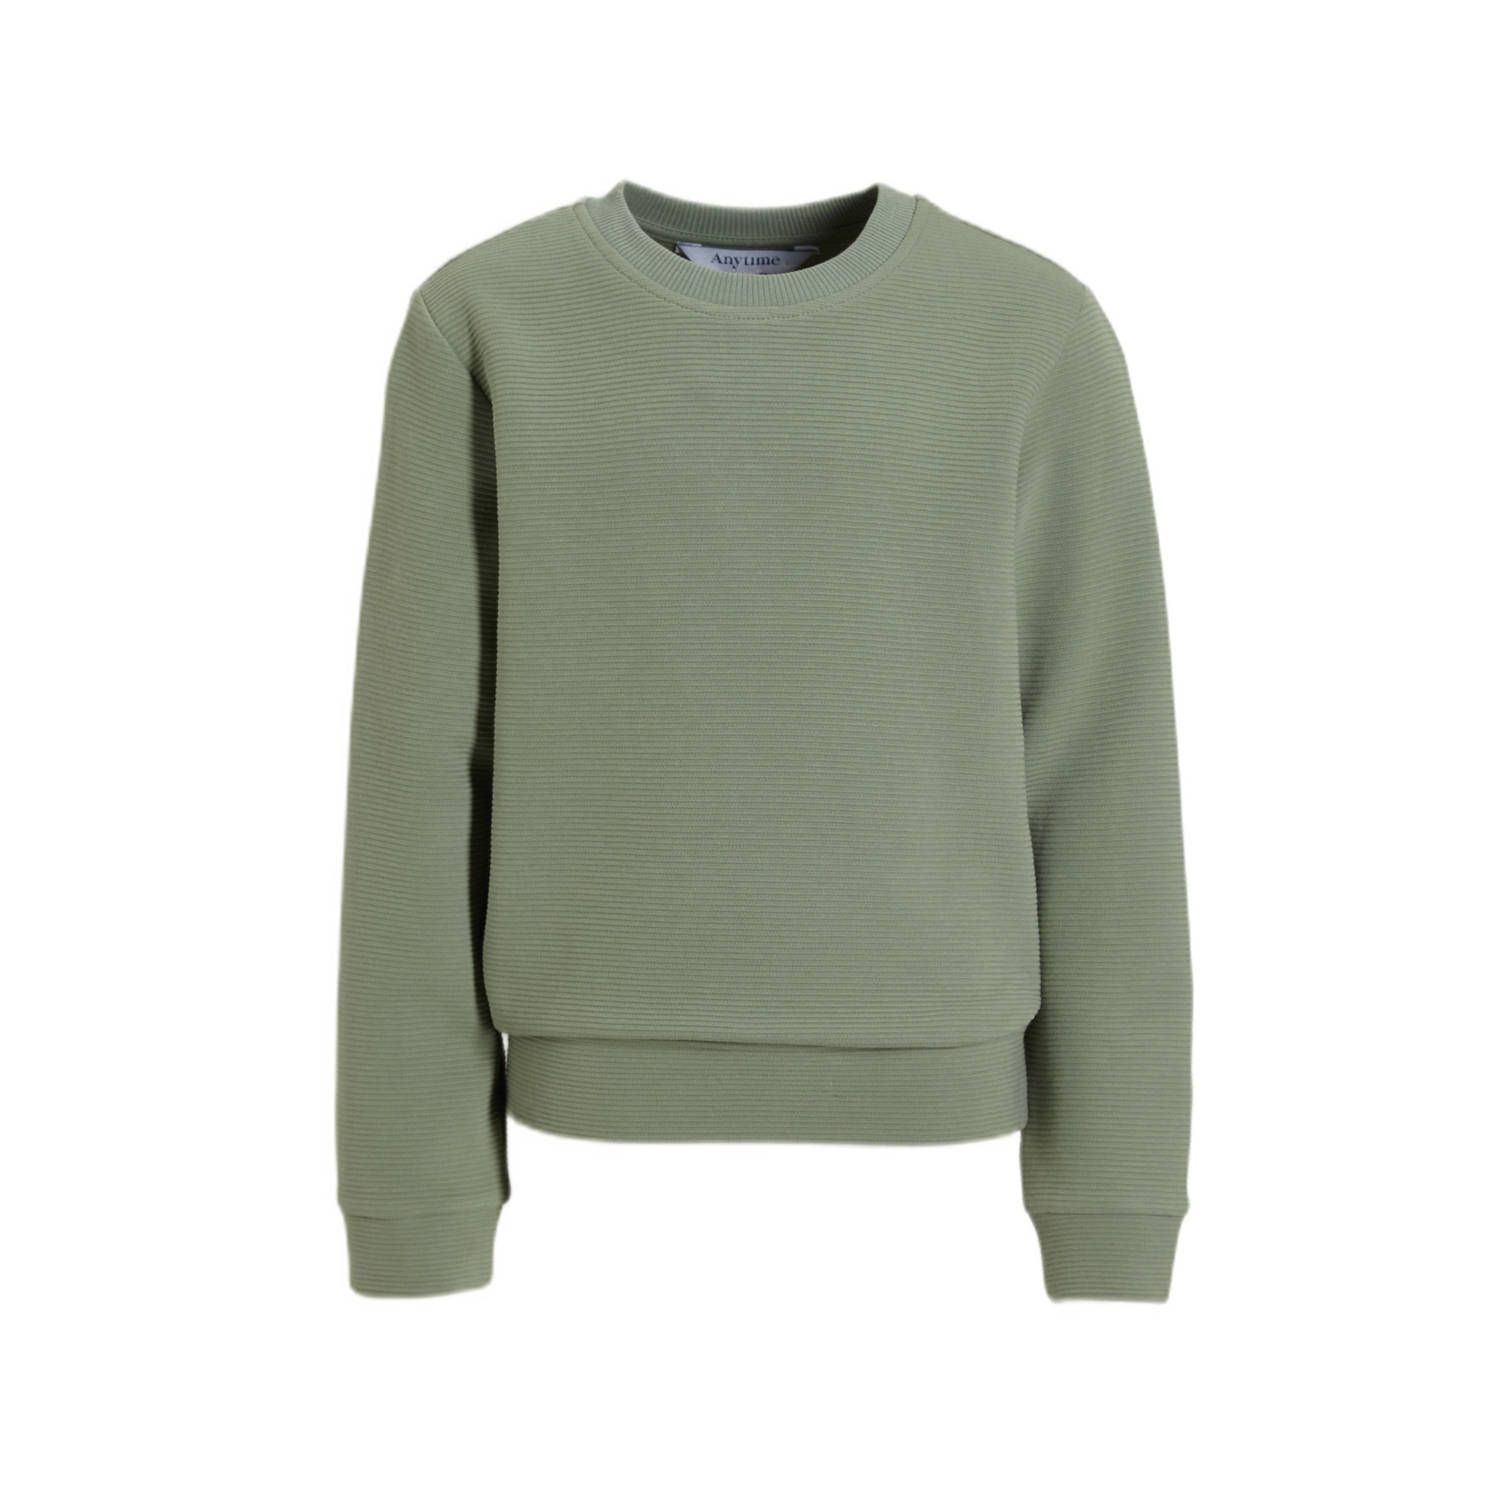 Anytime geribde sweater khaki T-shirt Groen Jongens Katoen Ronde hals Effen 110 116